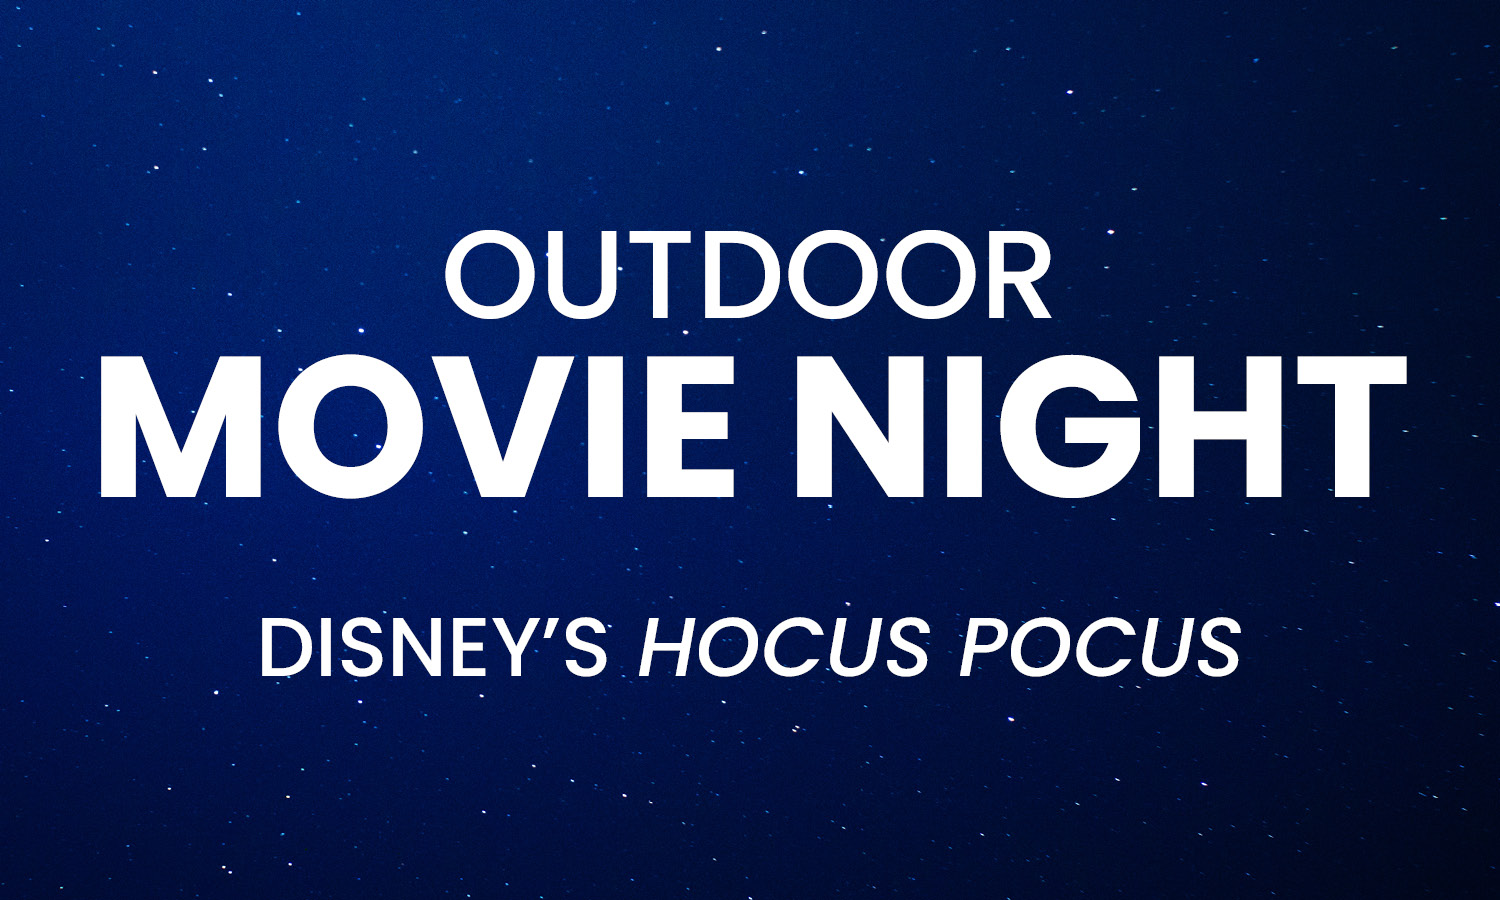 Illustration of starry night sky. Text reads: Outdoor Movie Night, Disney's Hocus Pocus